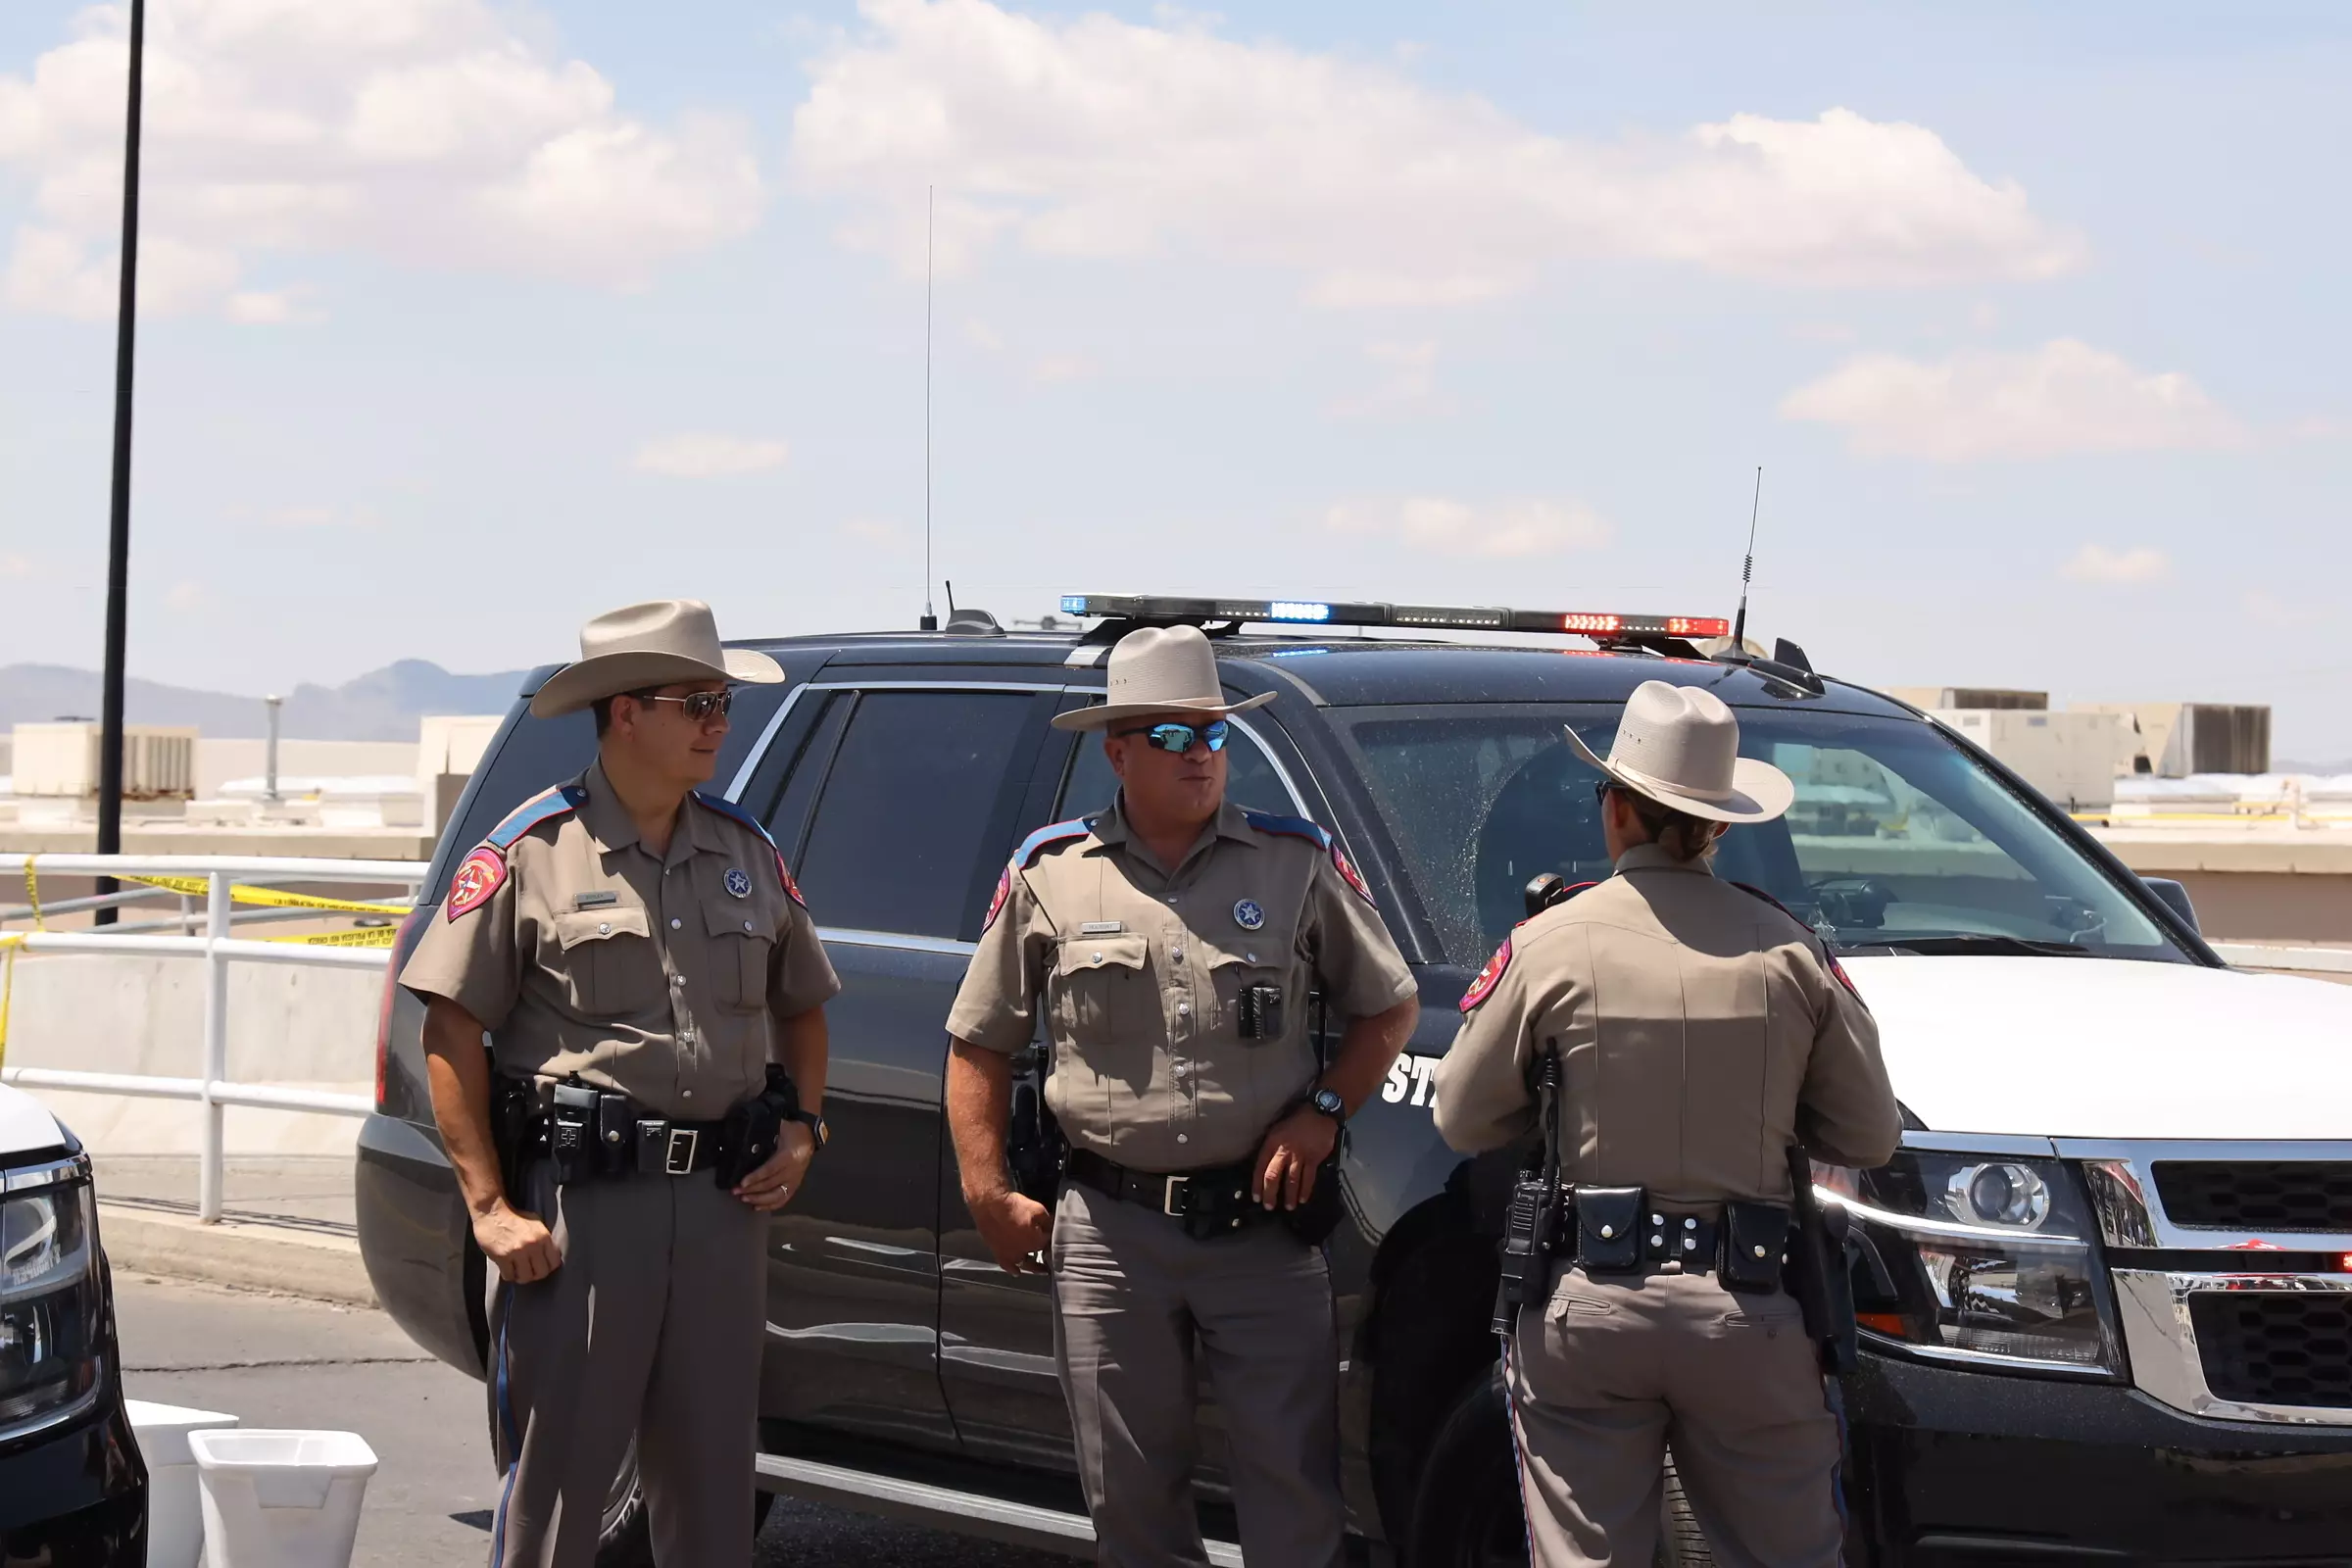 A gunman killed 22 people in El Paso on Saturday.